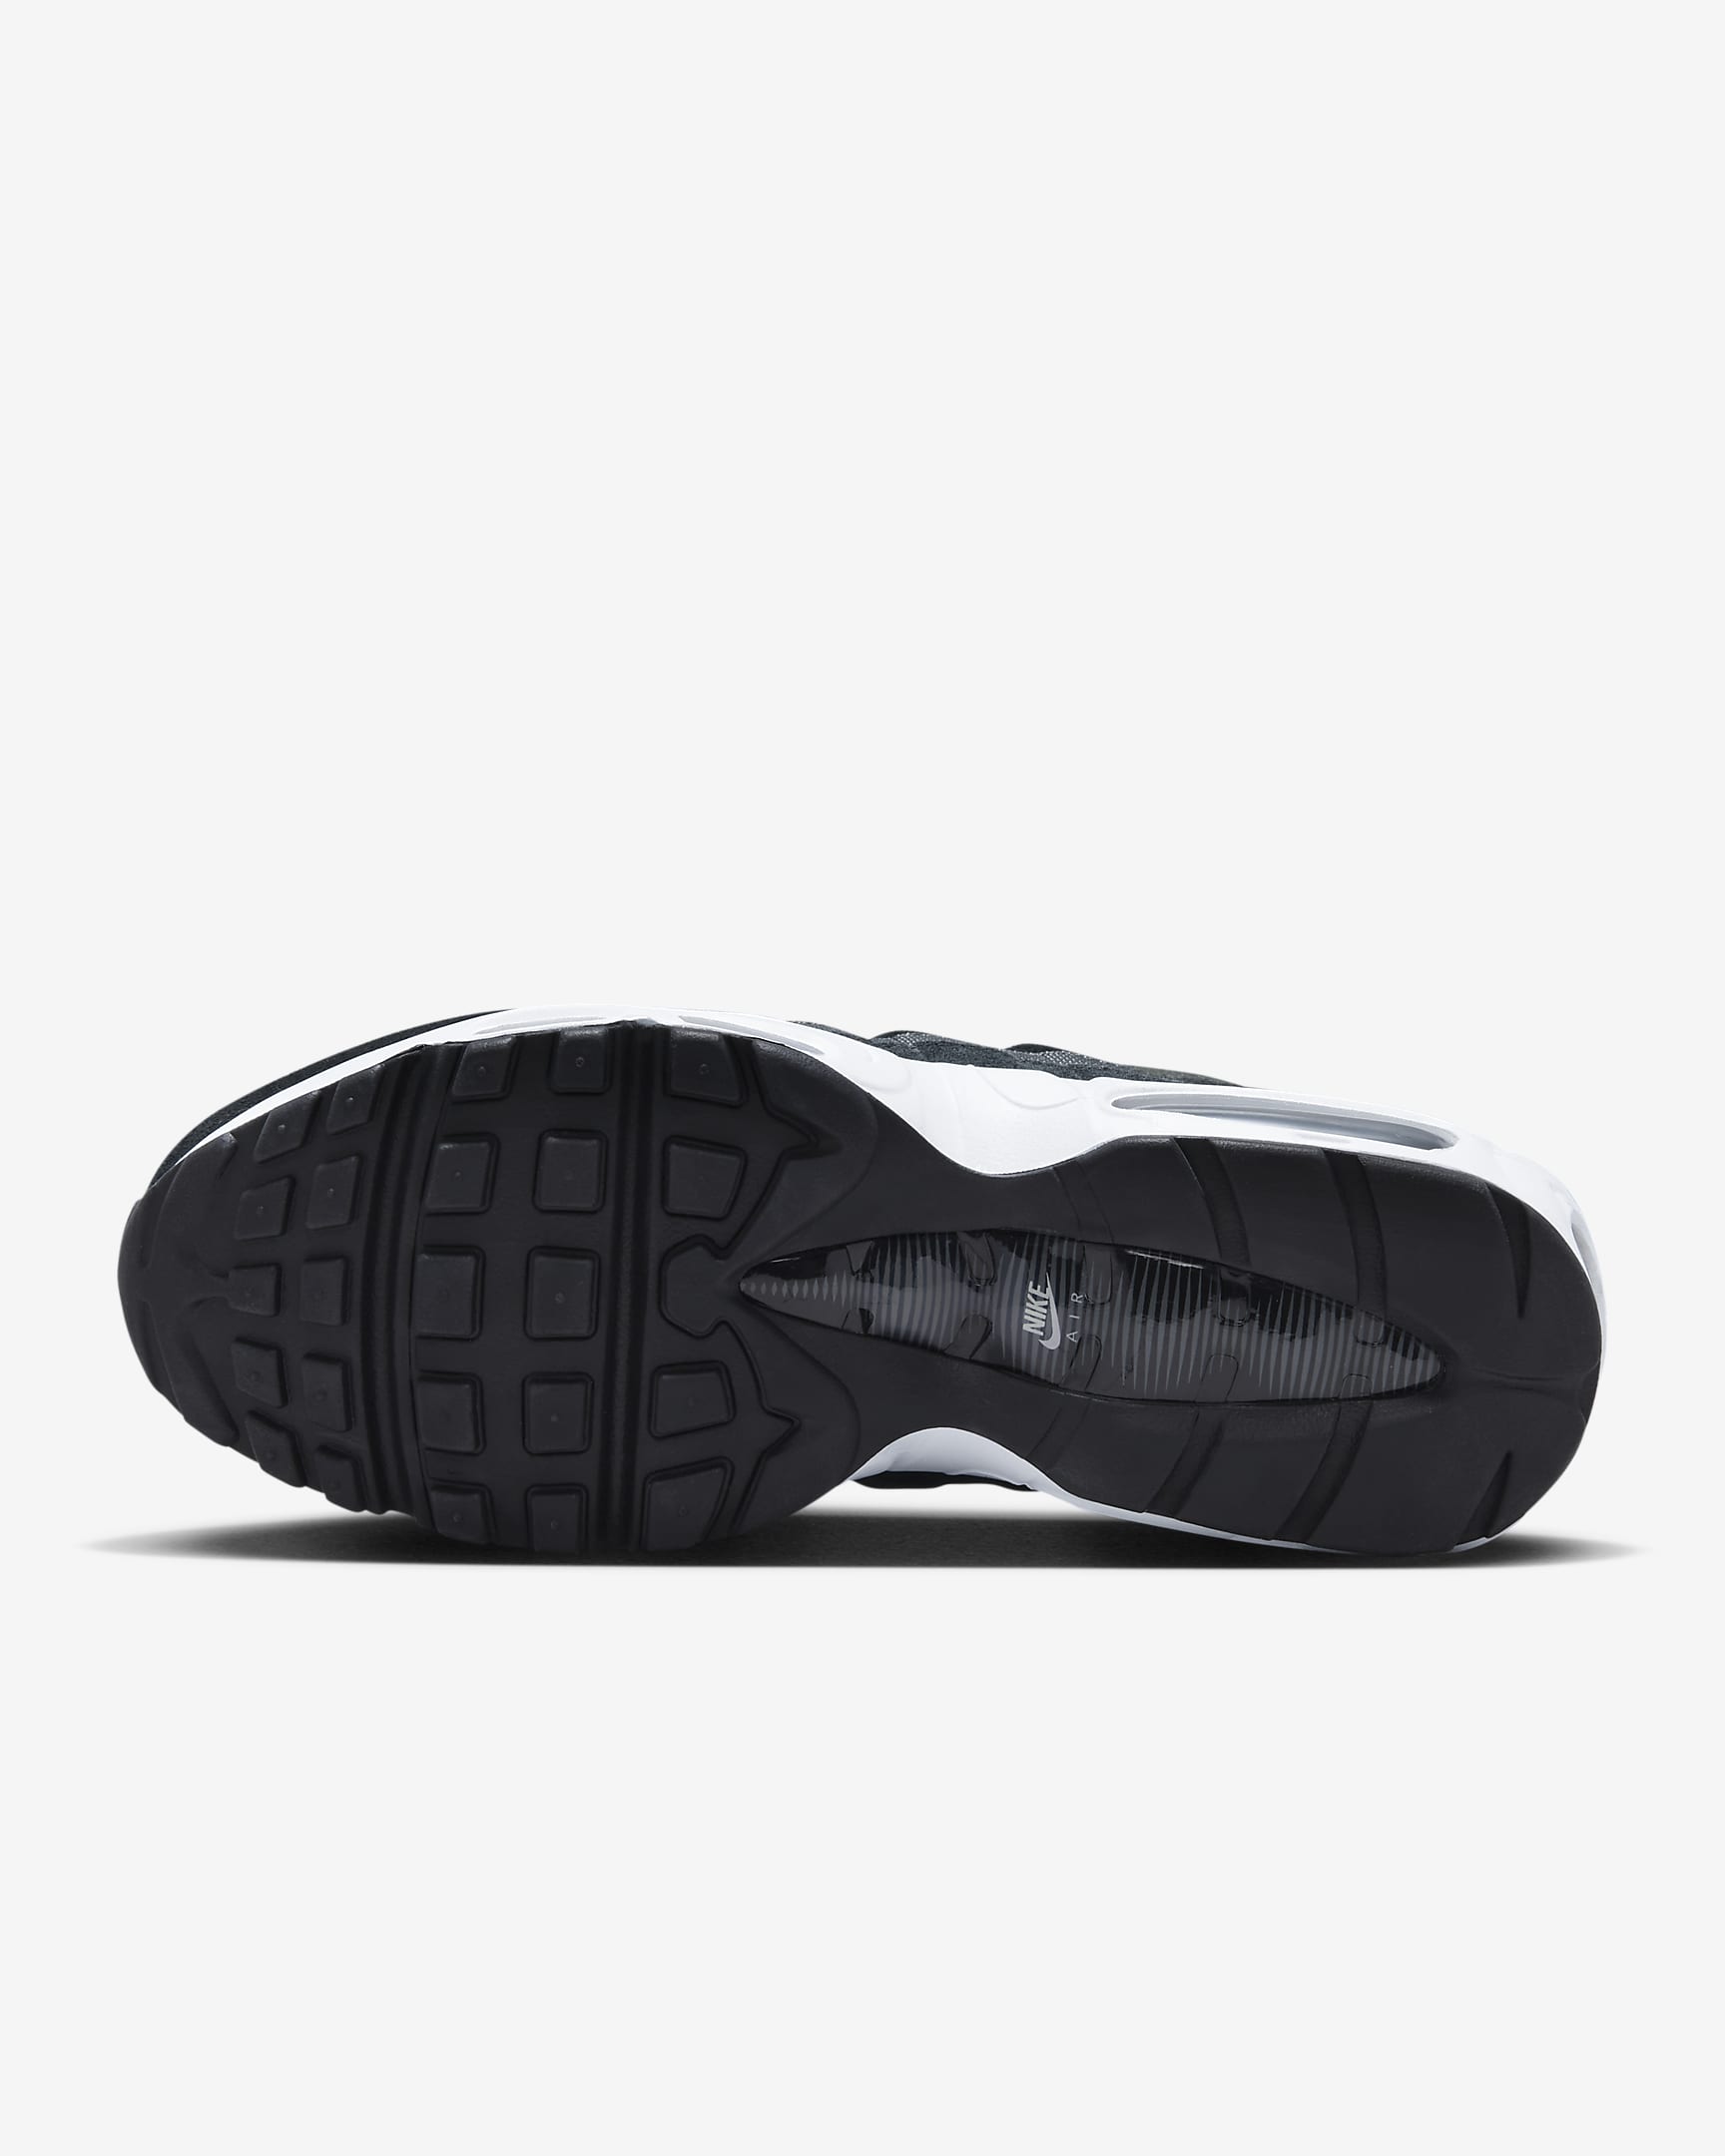 Nike Air Max 95 Men's Shoes - Black/Anthracite/White/Pure Platinum